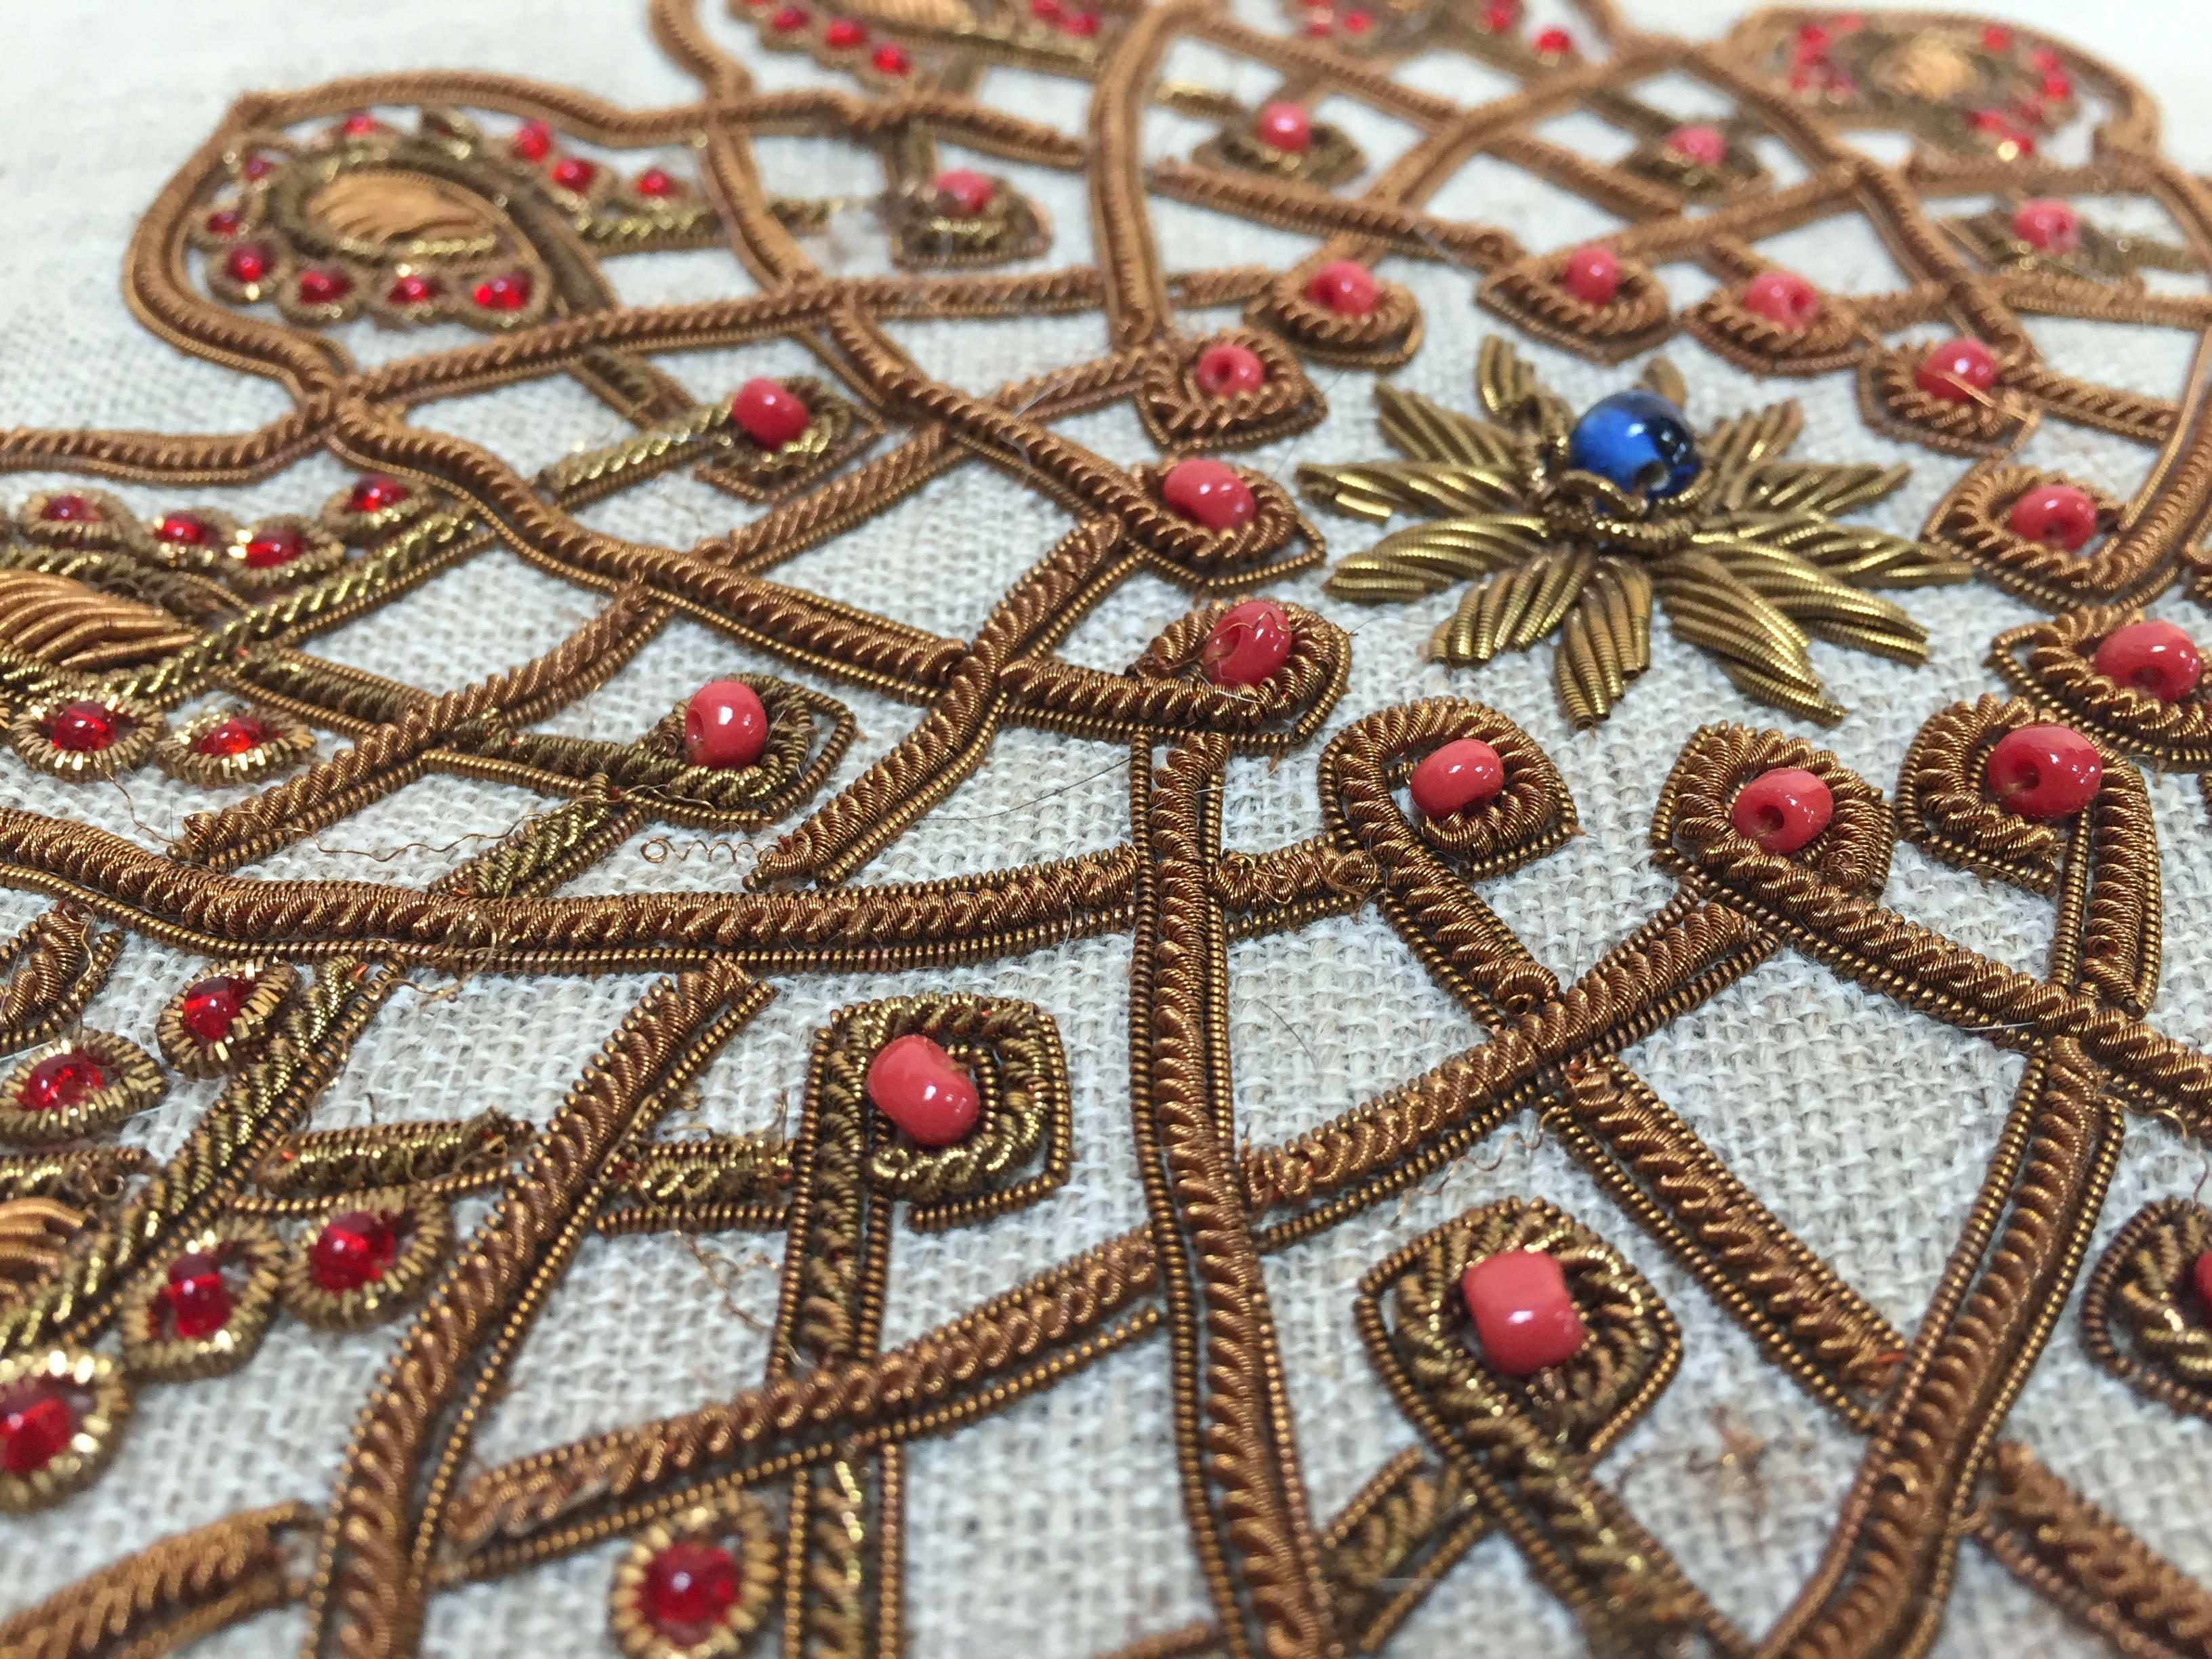 20th Century Throw Decorative Accent Pillow Embroidered with Moorish Metallic Threads Design